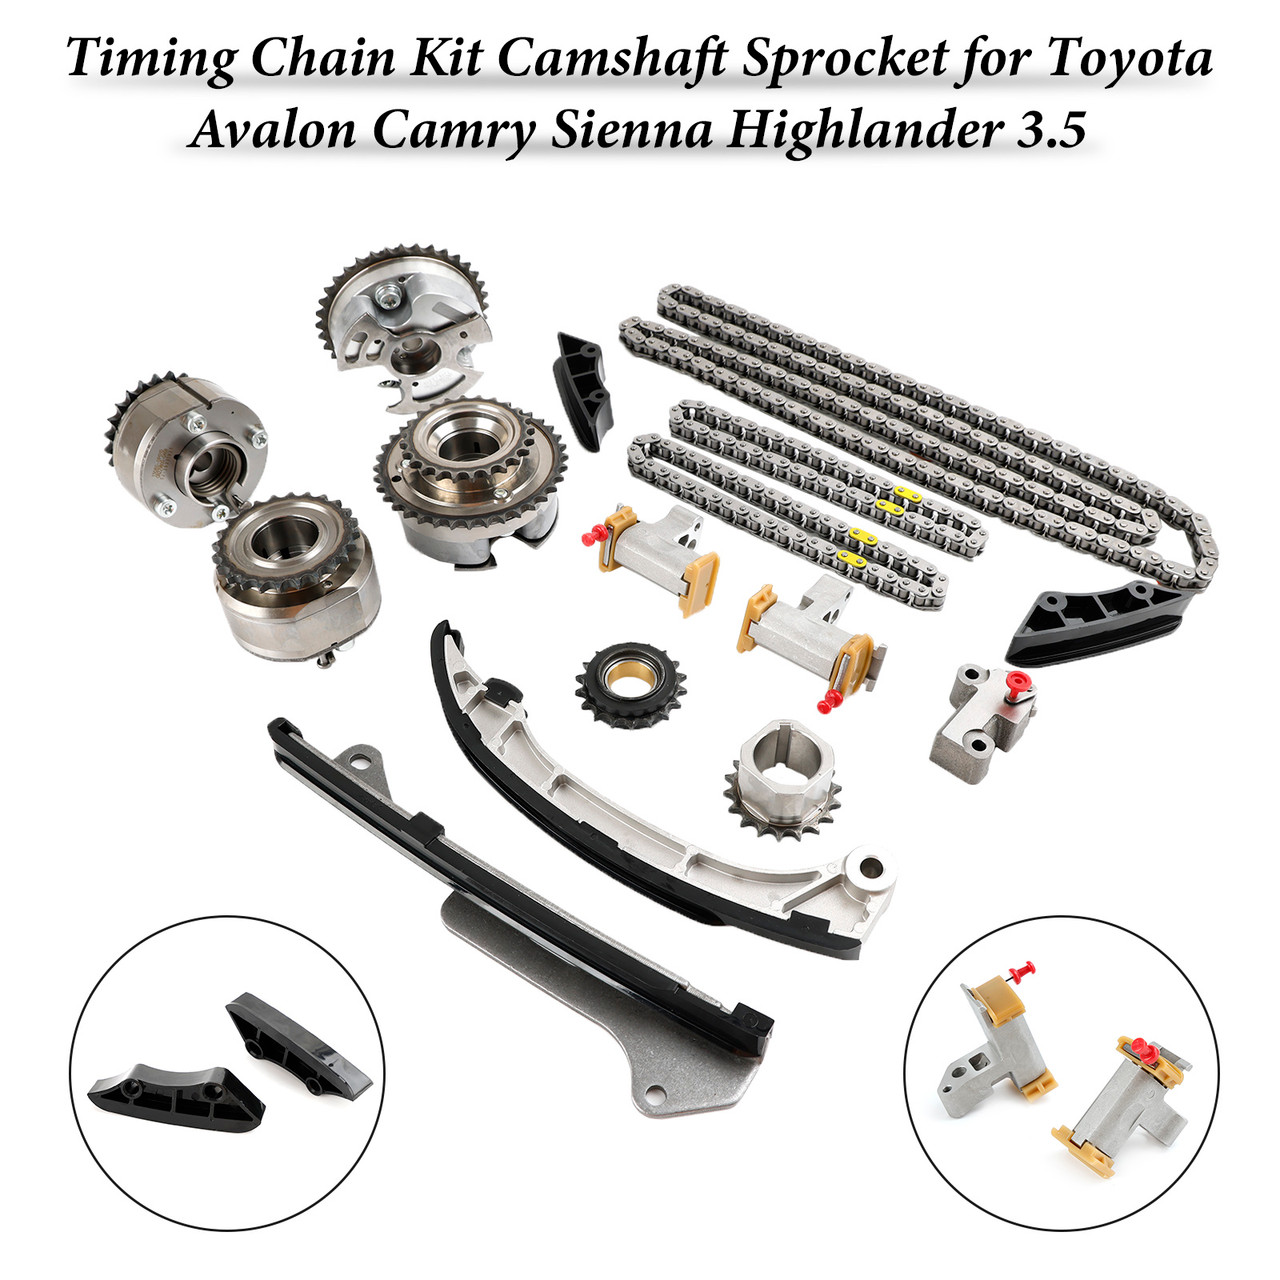 Timing Chain Kit Camshaft Sprocket for Toyota Avalon Camry Sienna Highlander 3.5